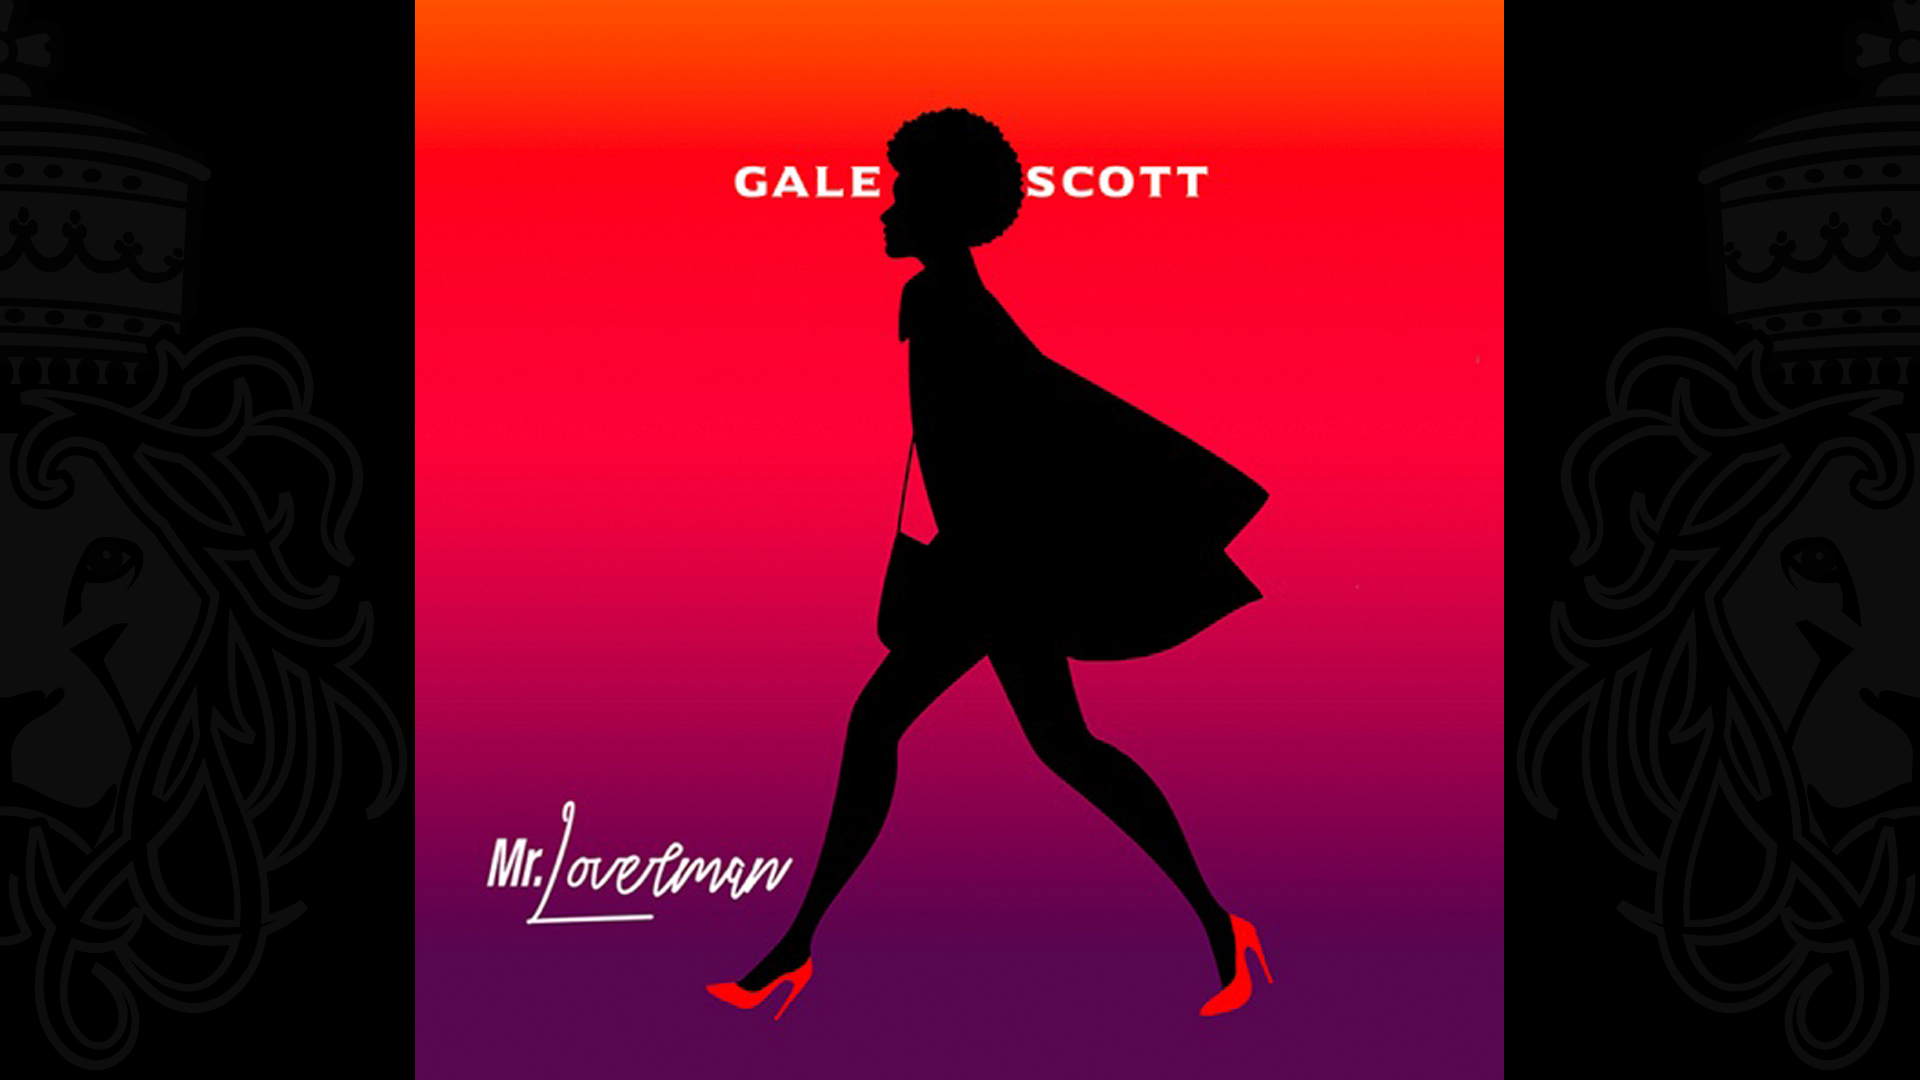 Mr Lover man Gale Scott